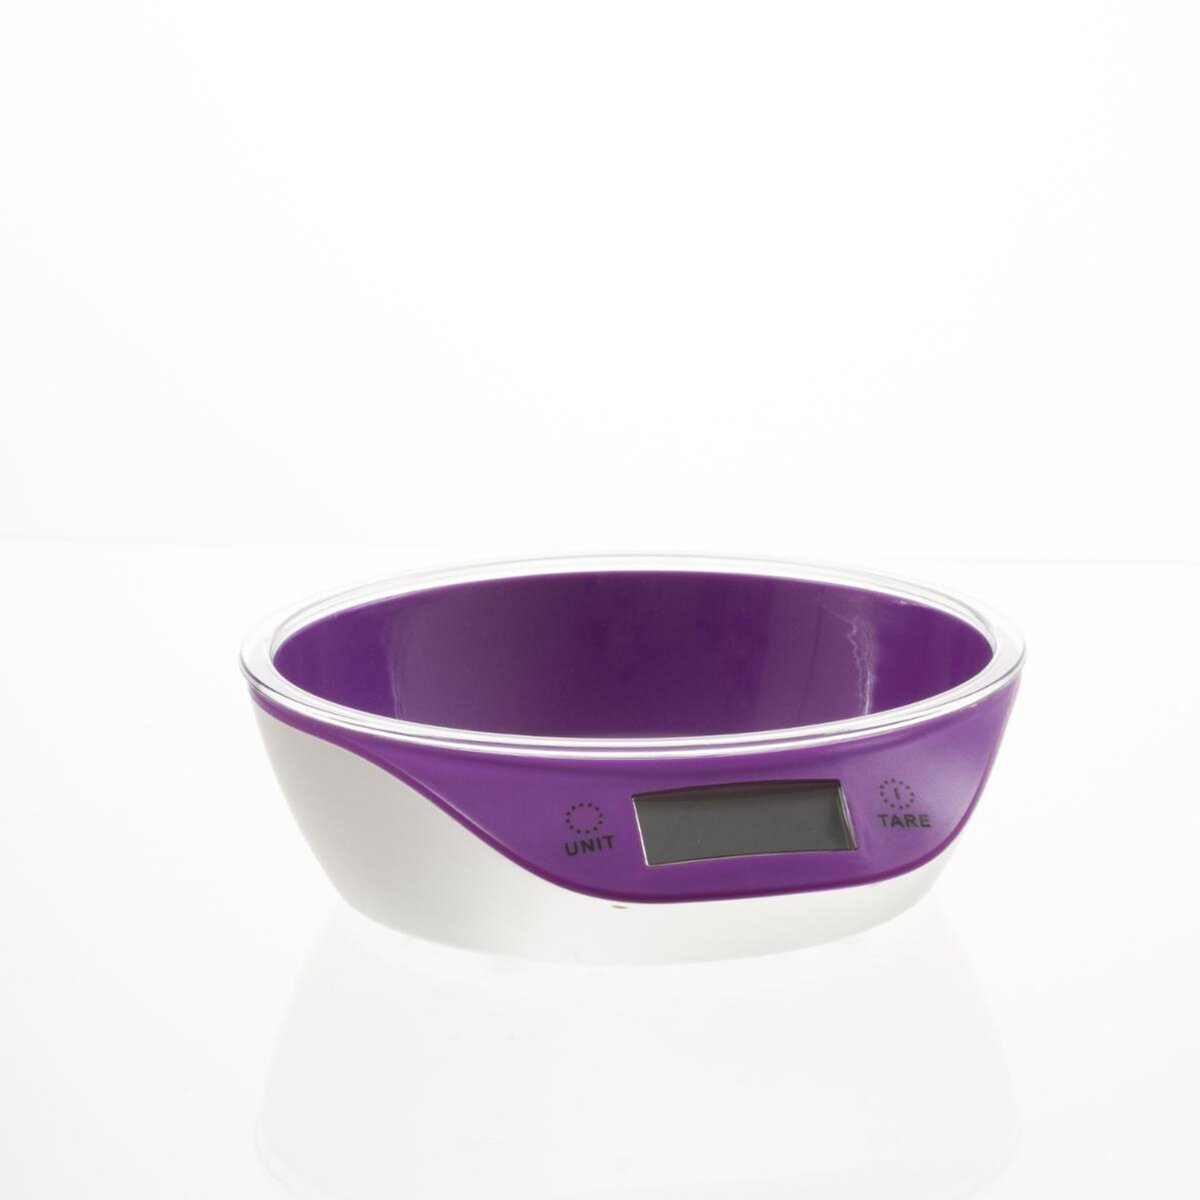 SECRET DE GOURMET Balance digitale avec bol amovible violet